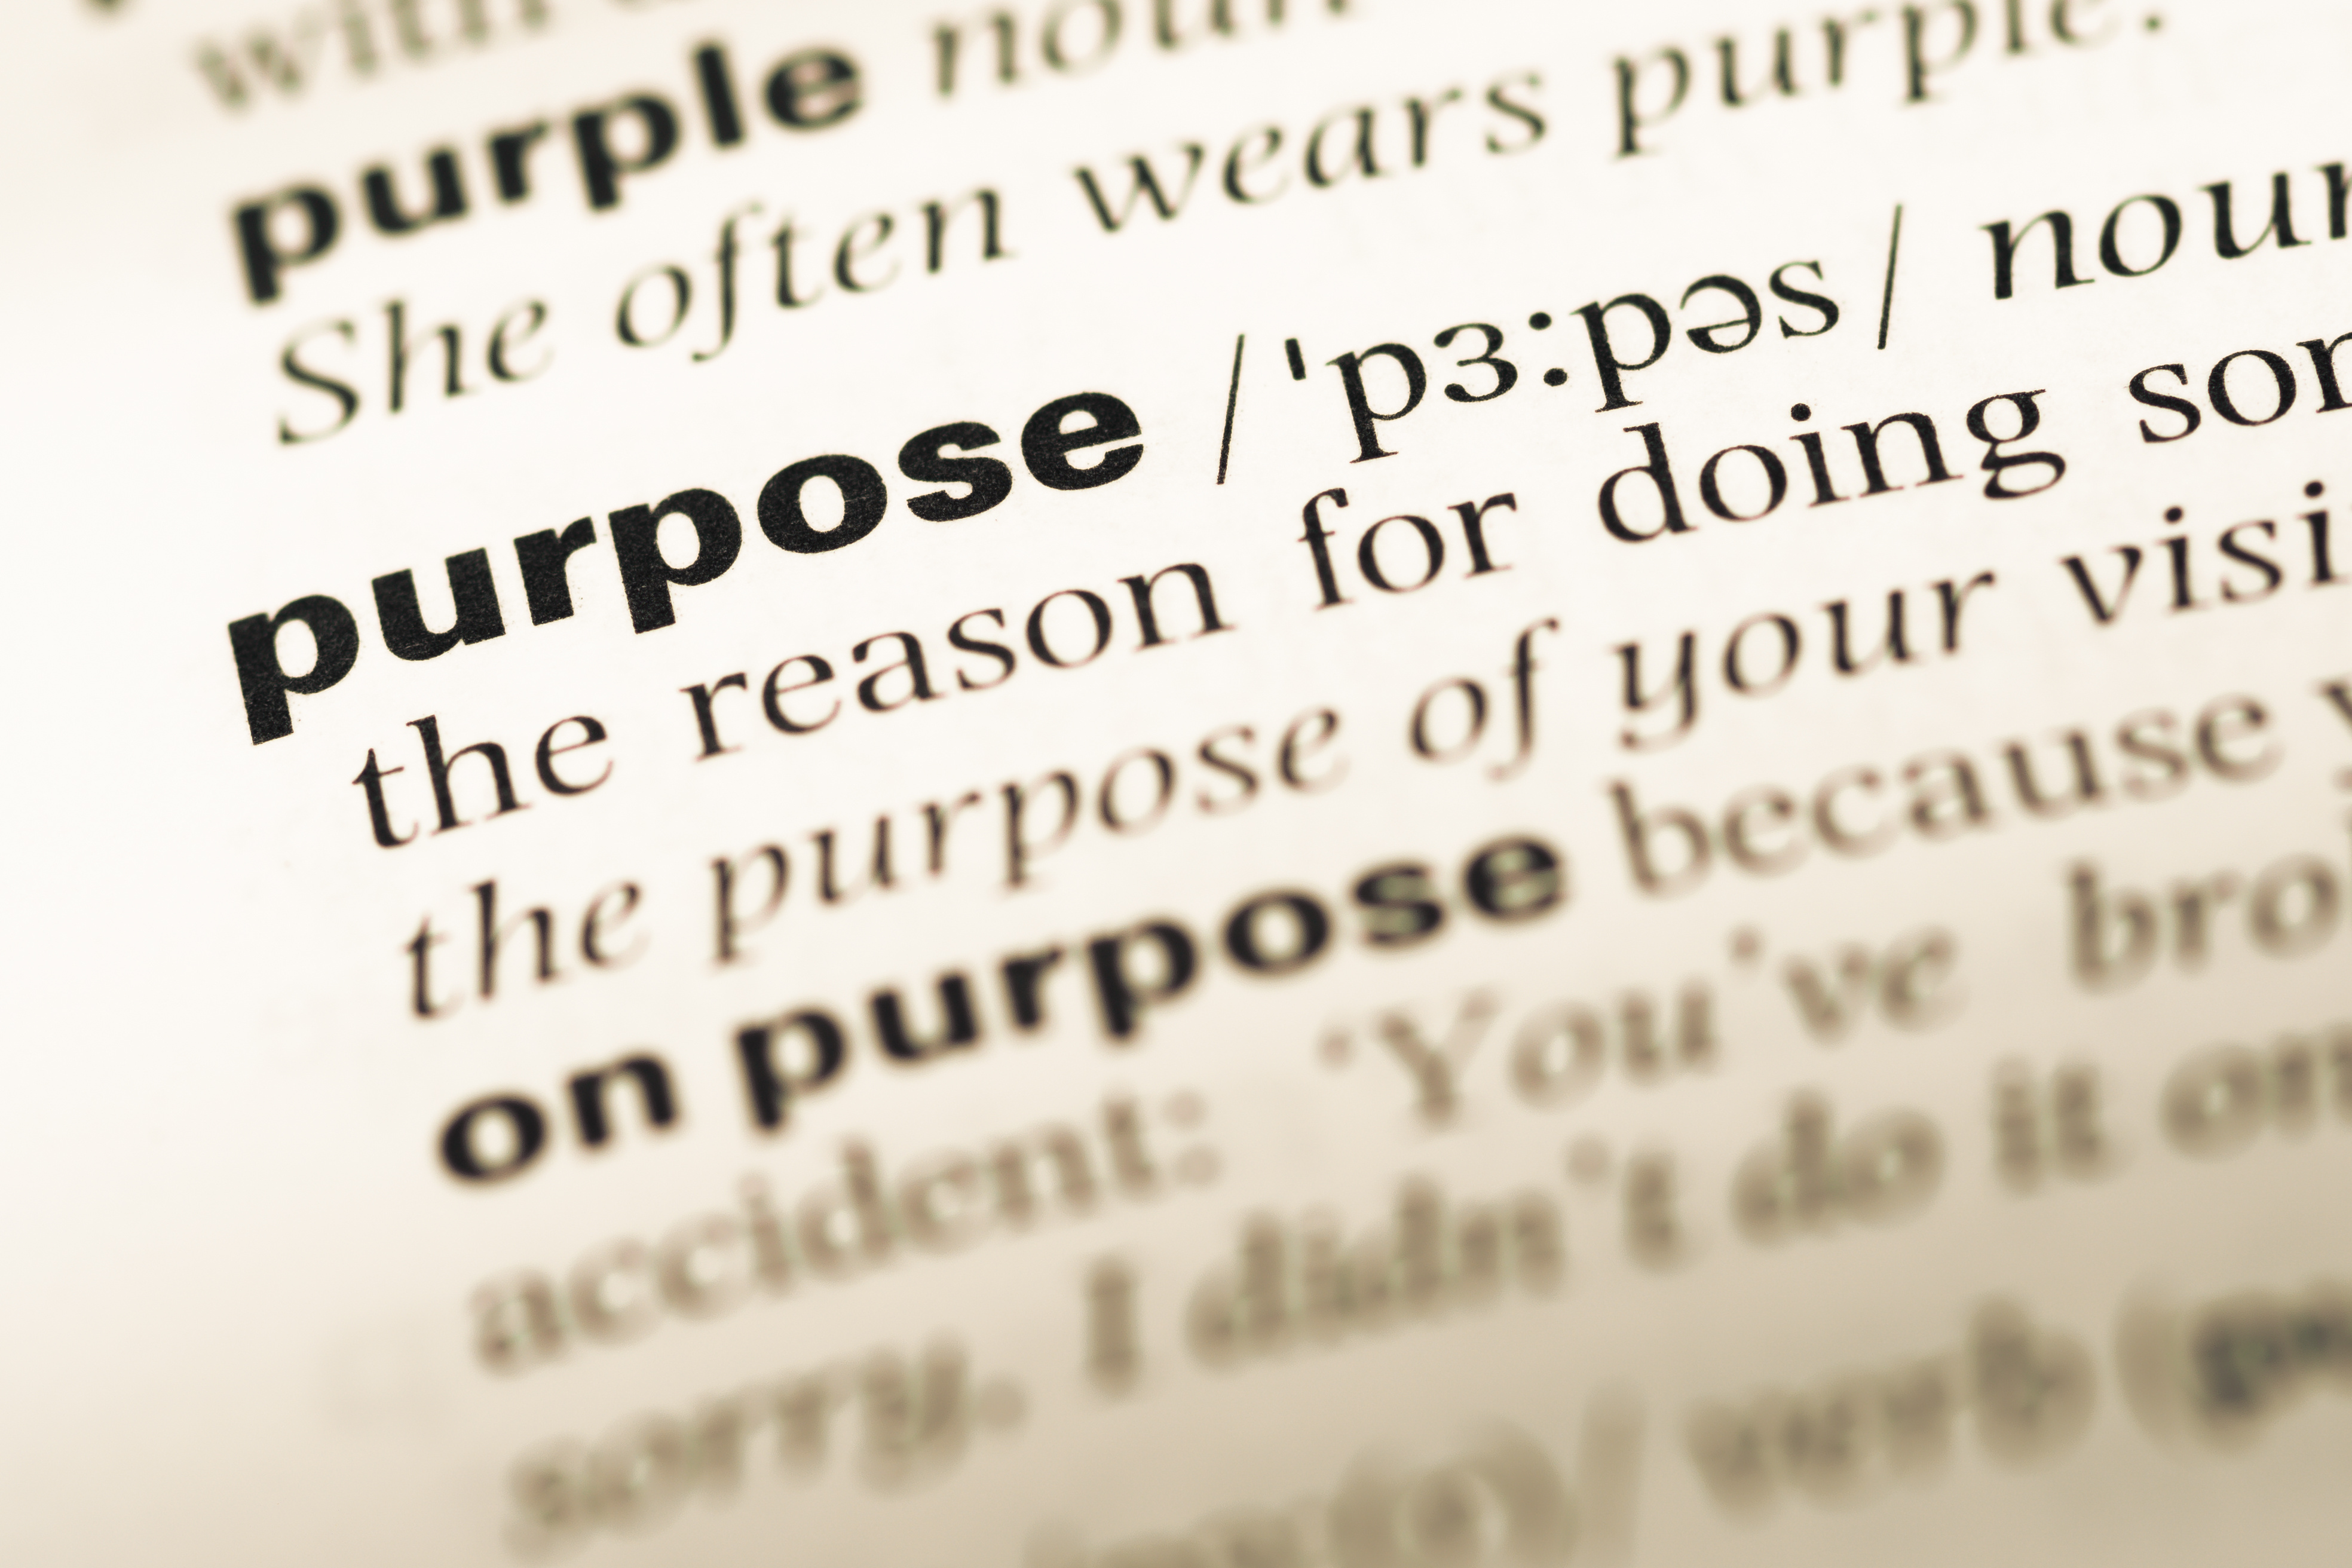 Helping people find spiritual purpose